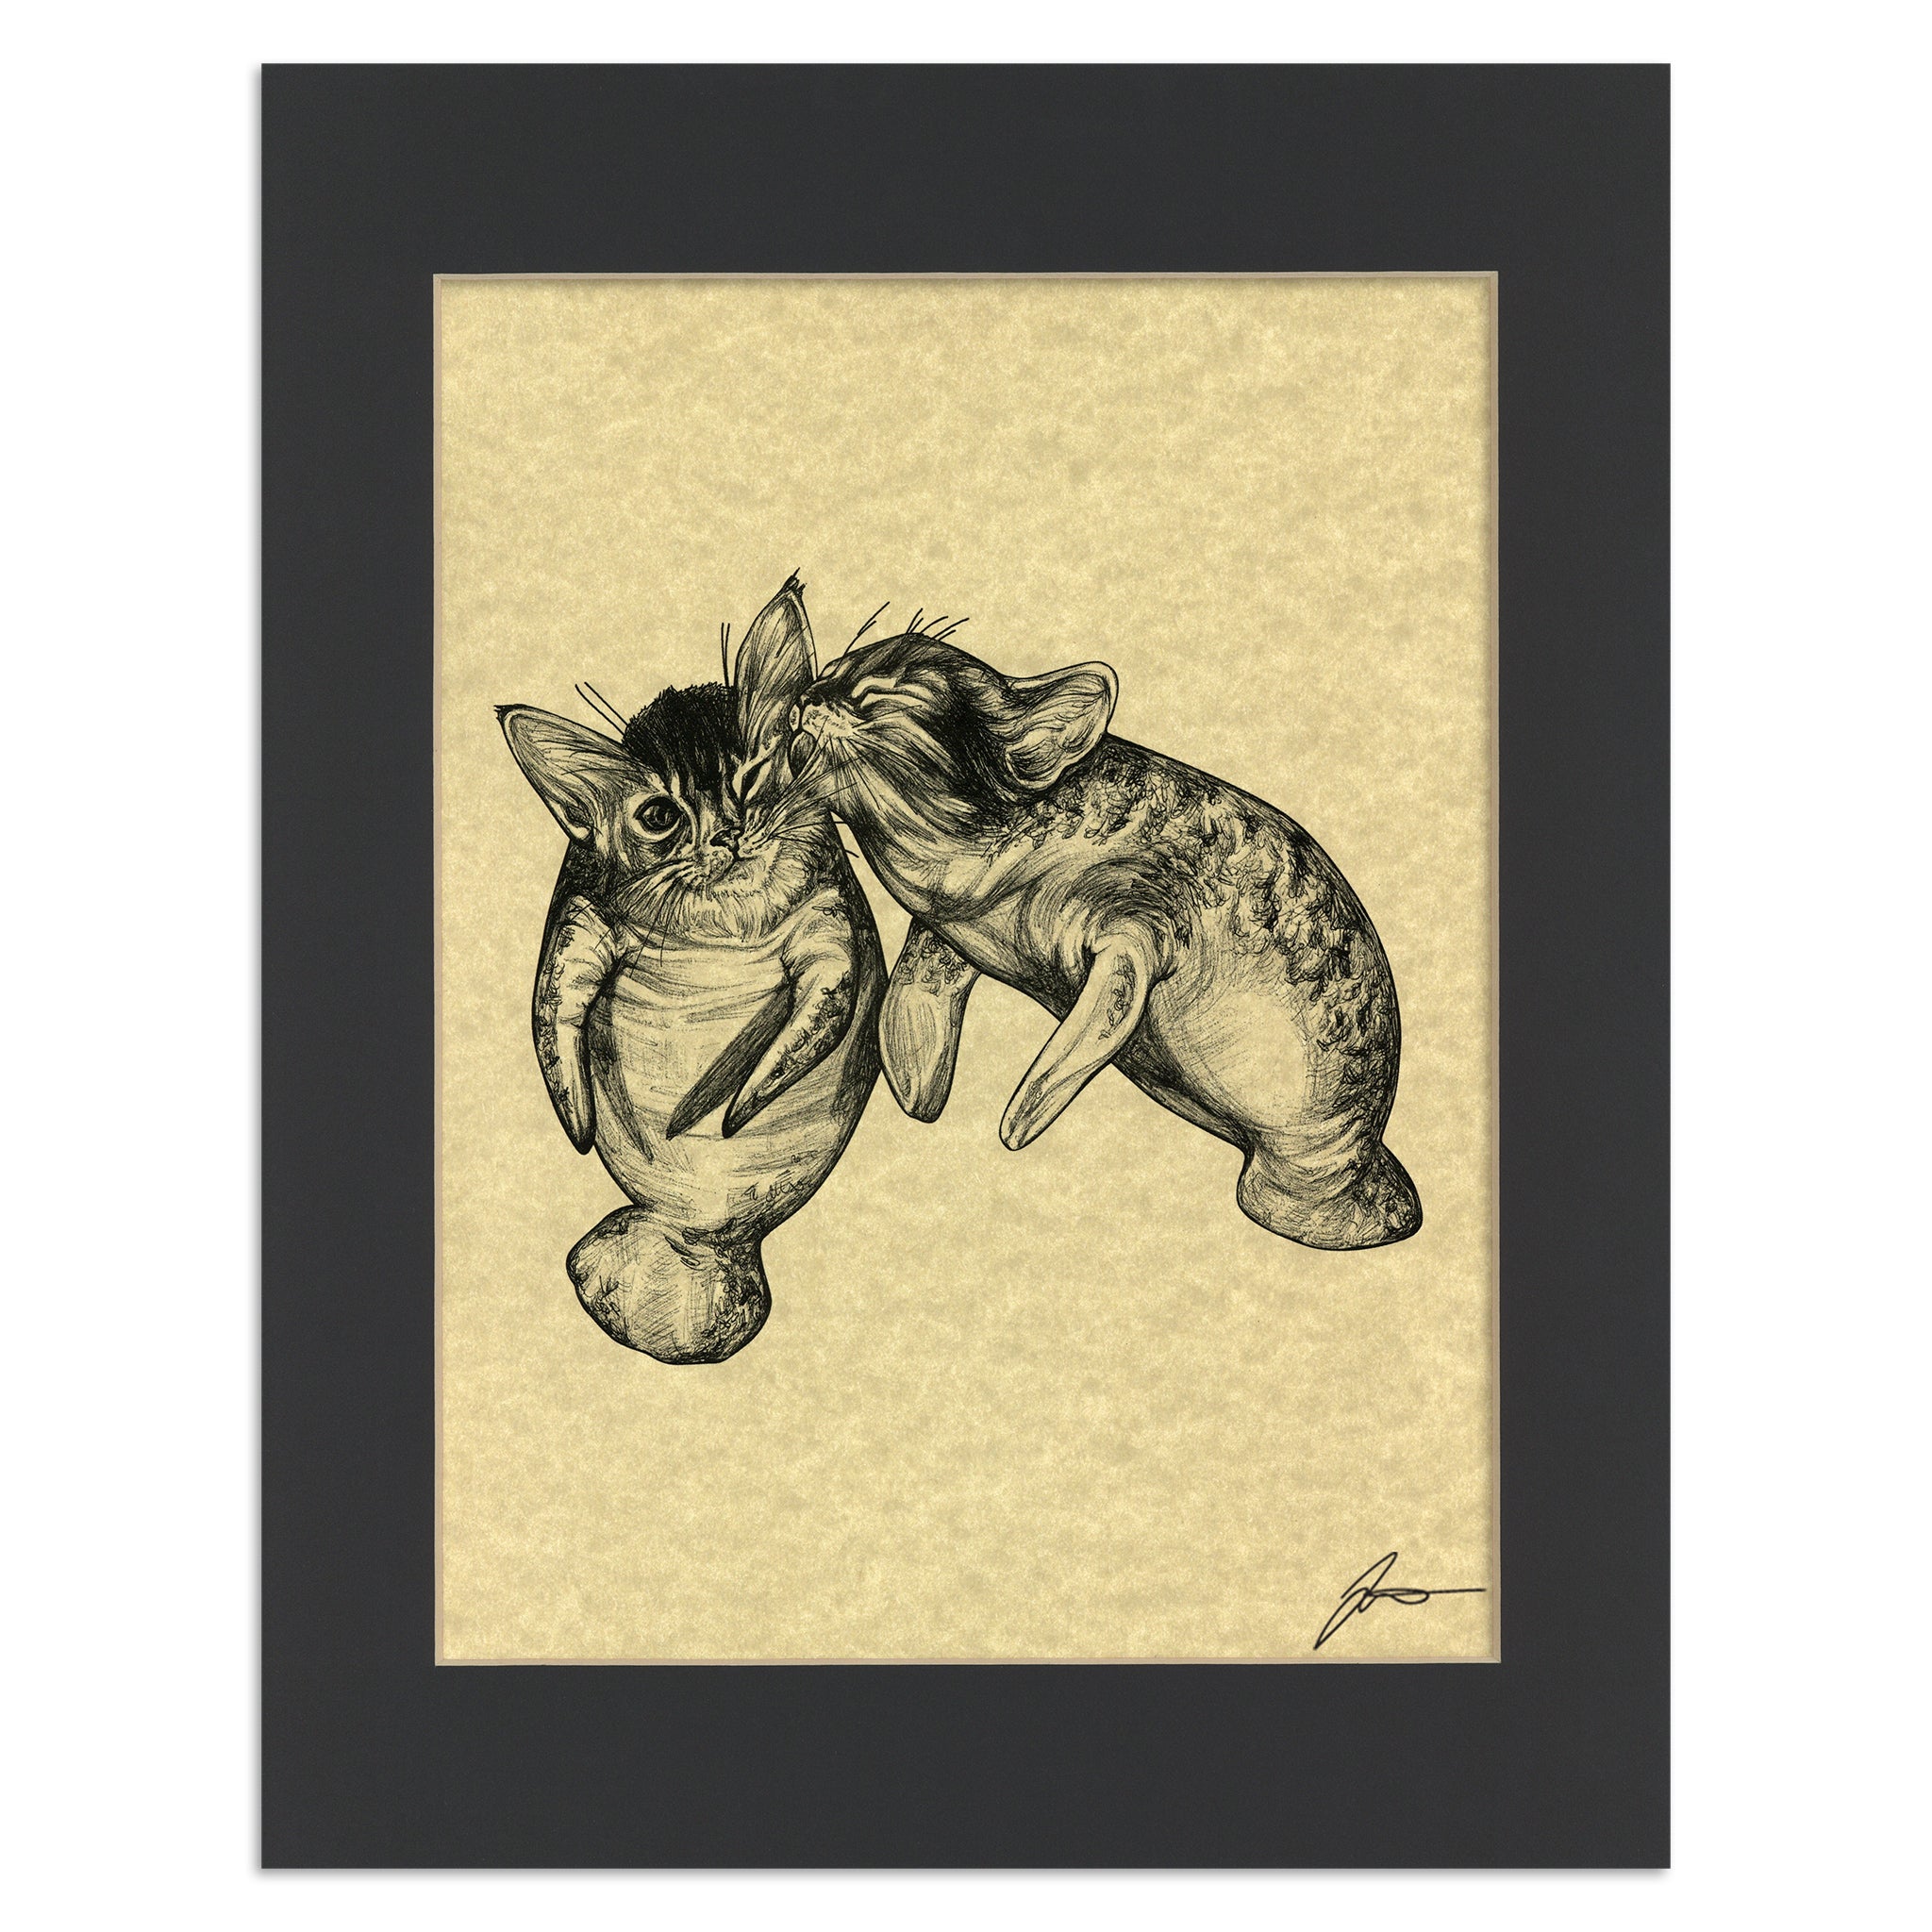 Manakittens | Manatee + Kitten Hybrid Animal | 11x14" Parchment Print